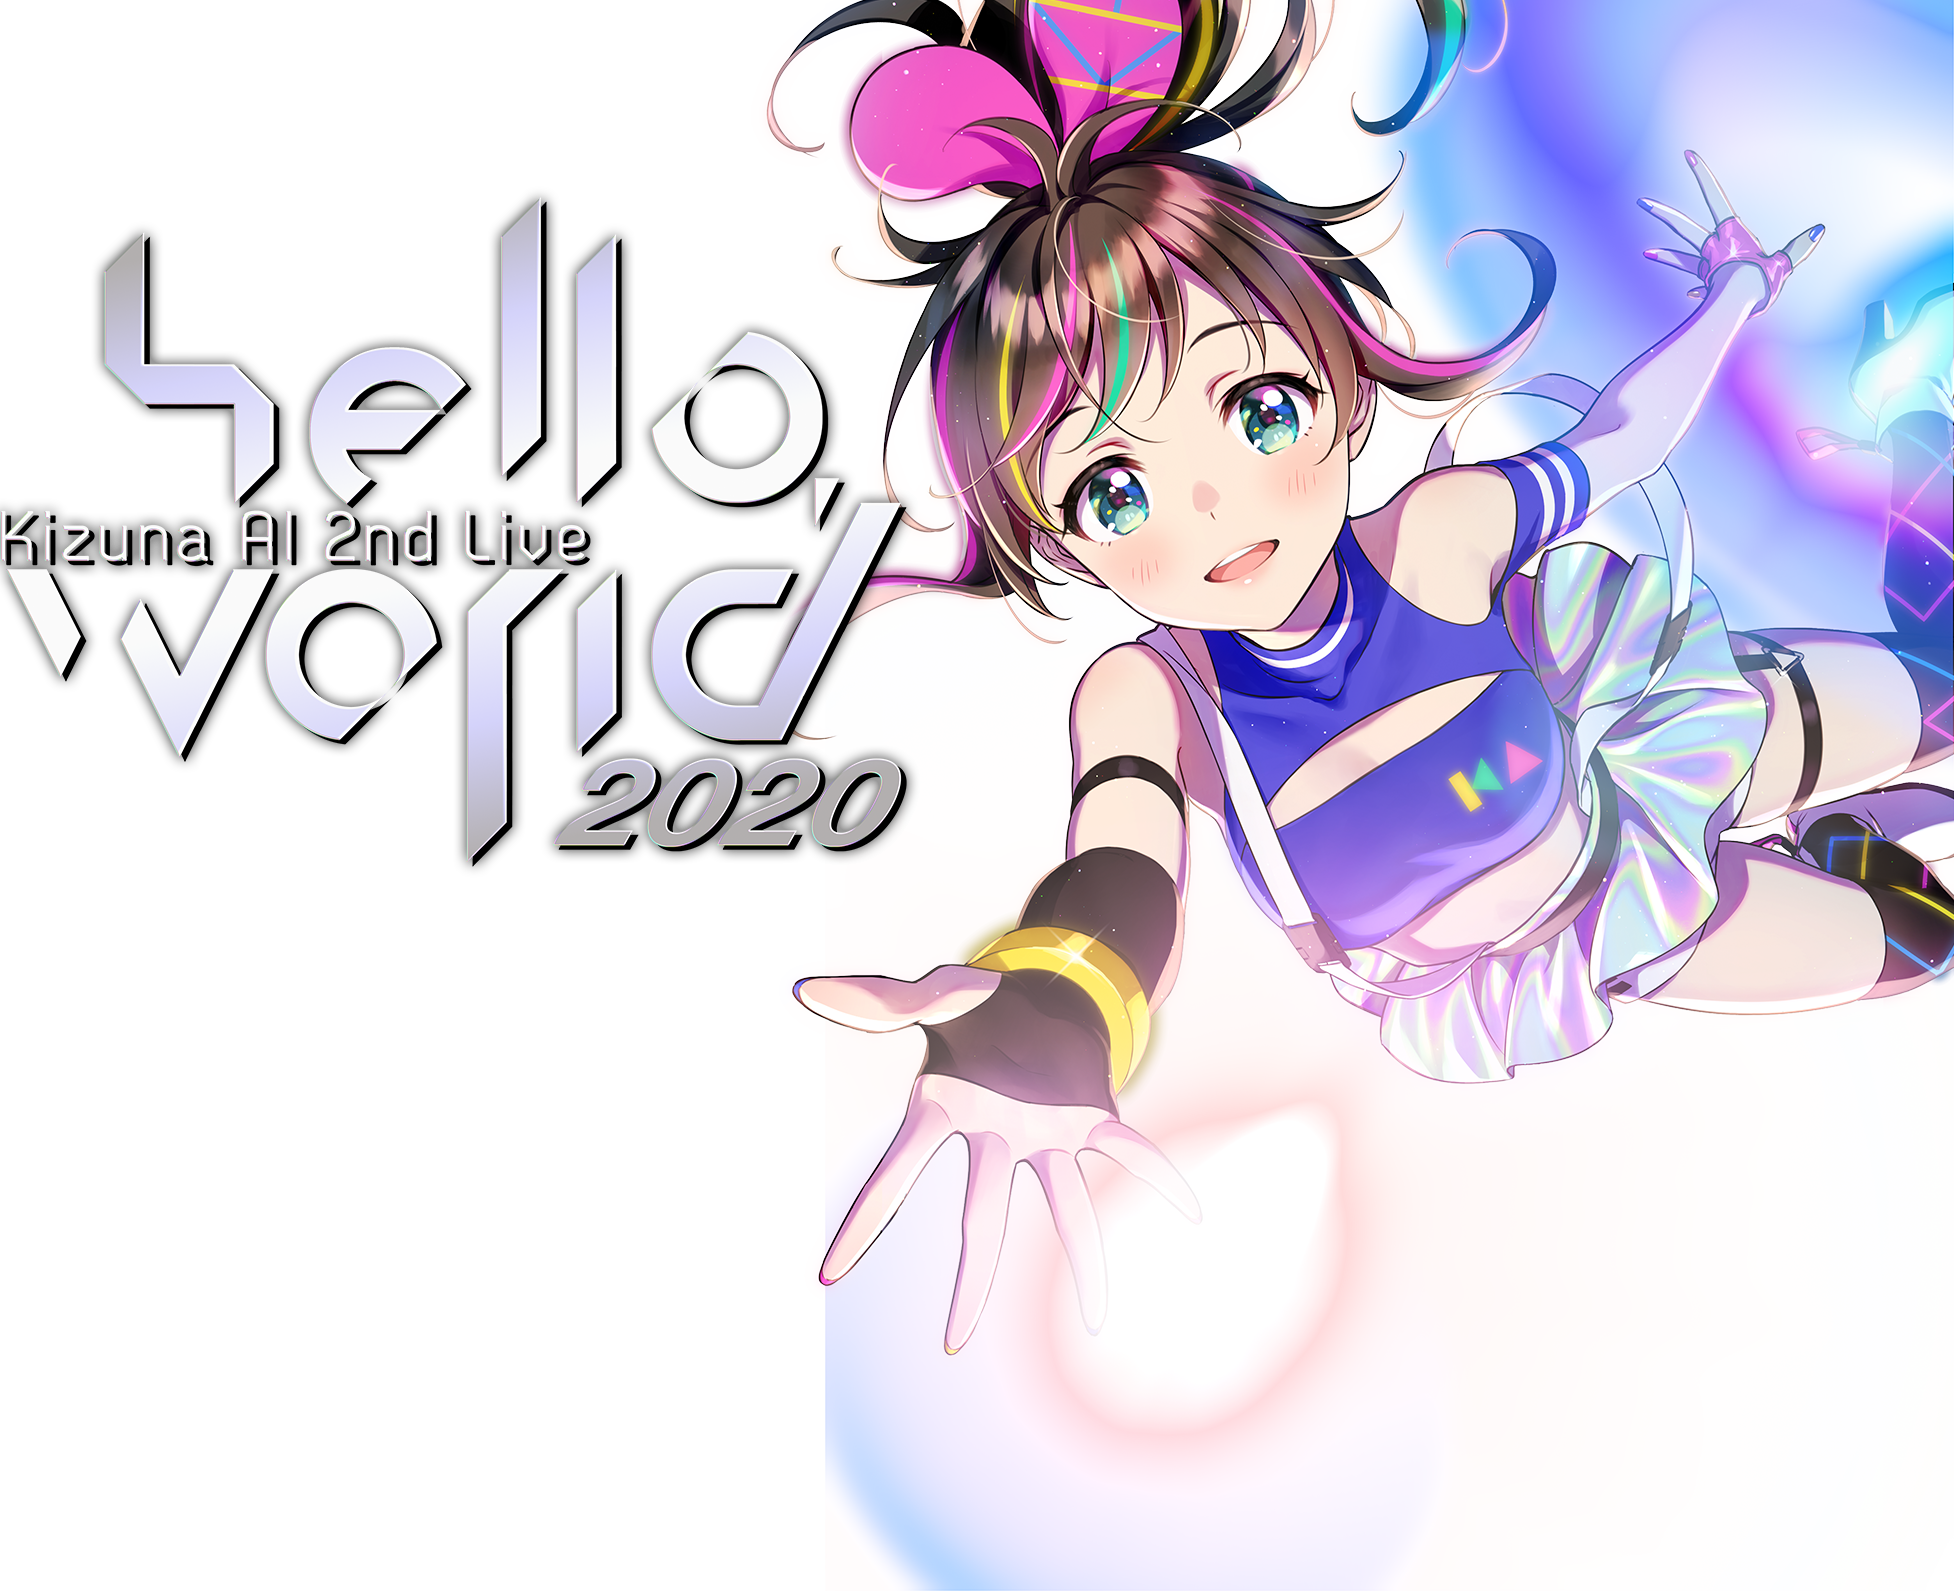 Kizuna Ai 2nd Live Hello World